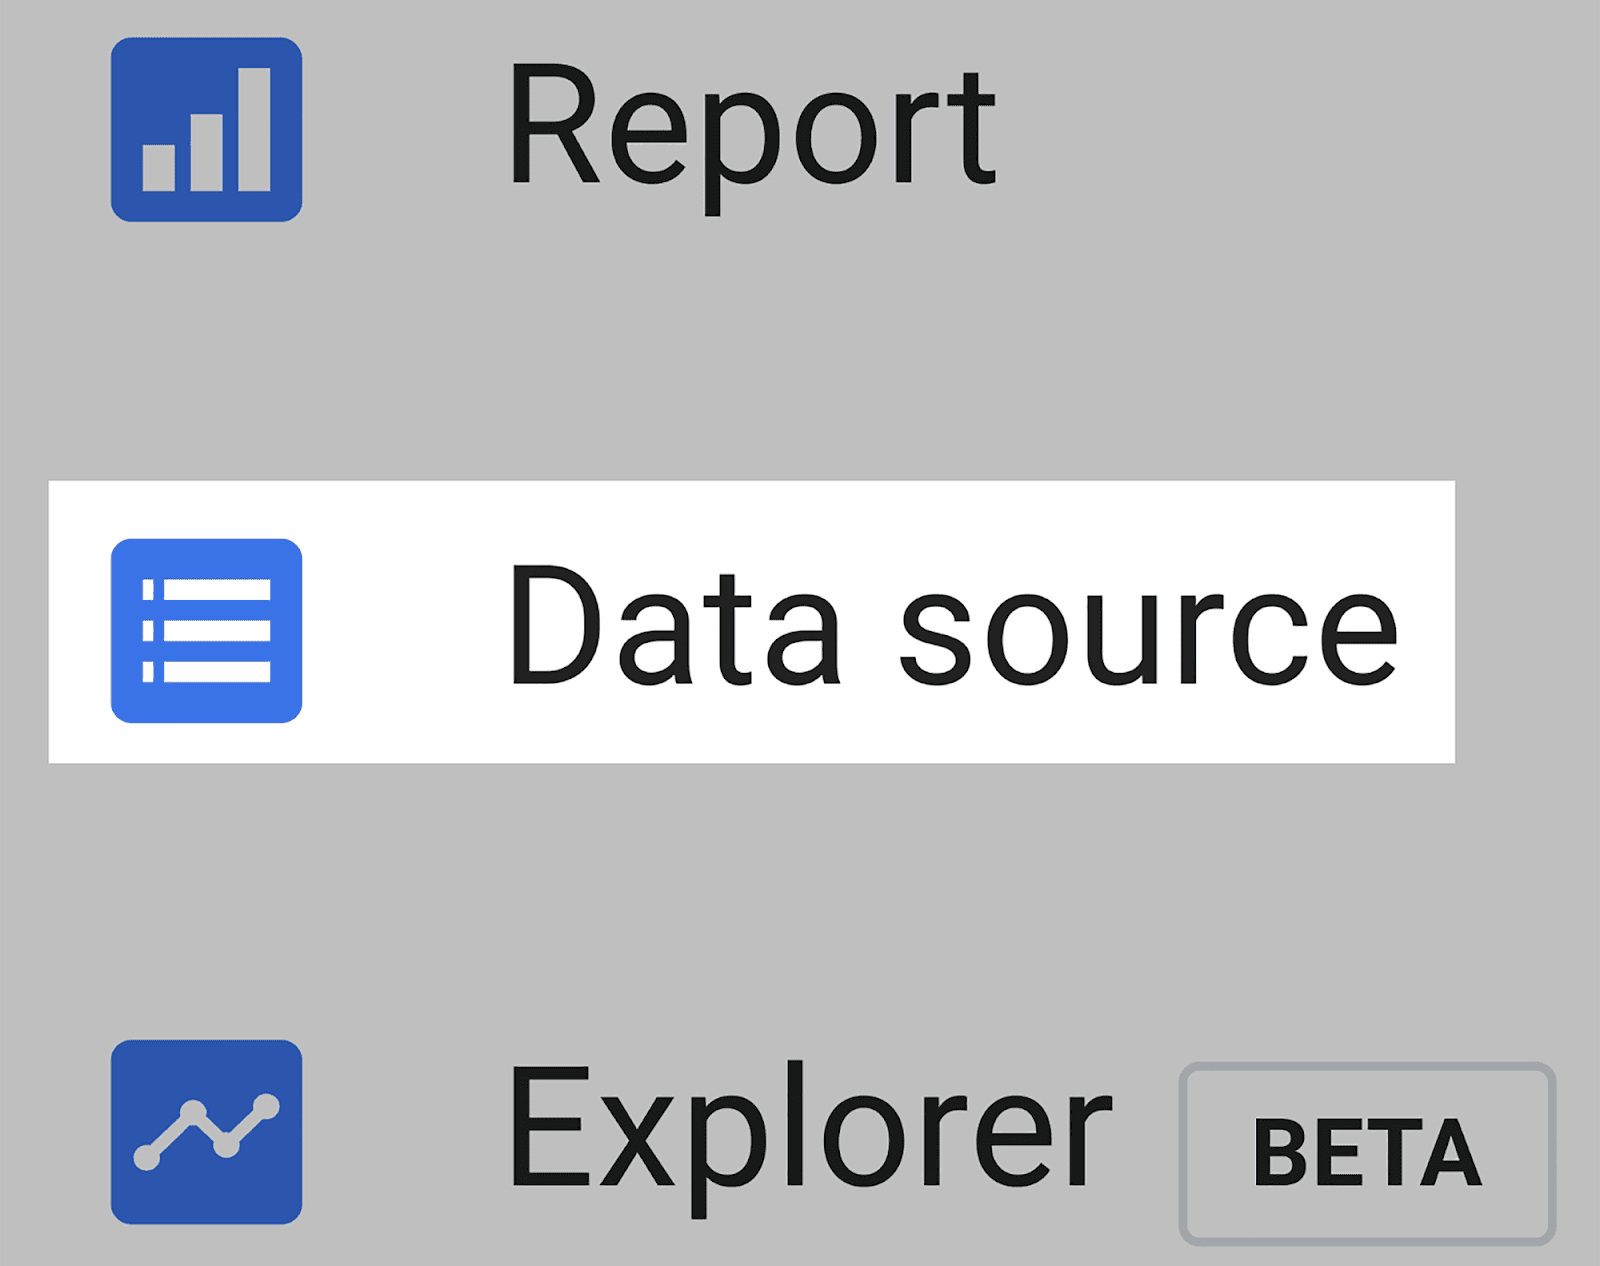 Choose Data Source from the drop-down menu